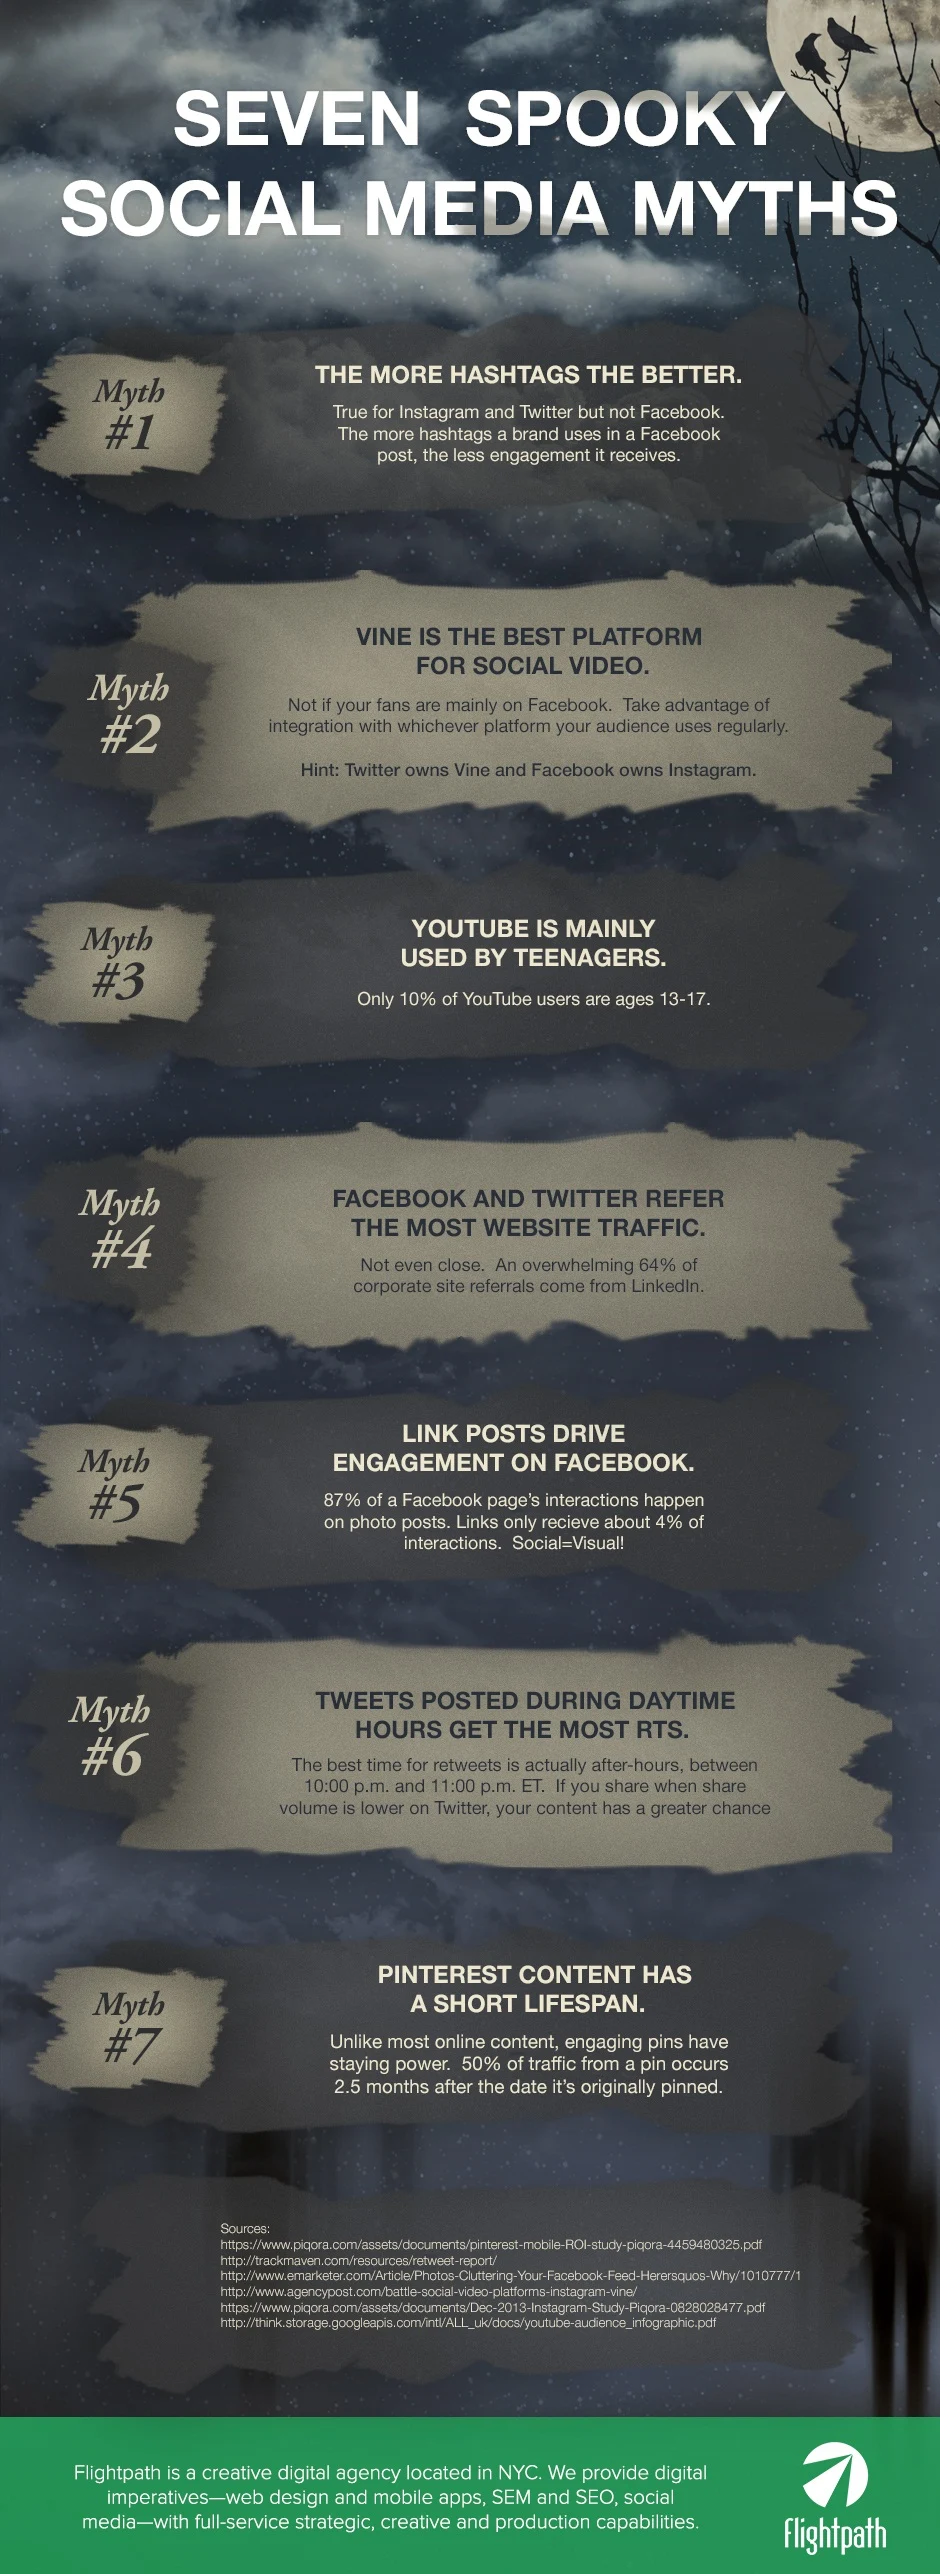 Seven Spooky #SocialMedia Marketing Myths Debunked - #infographic